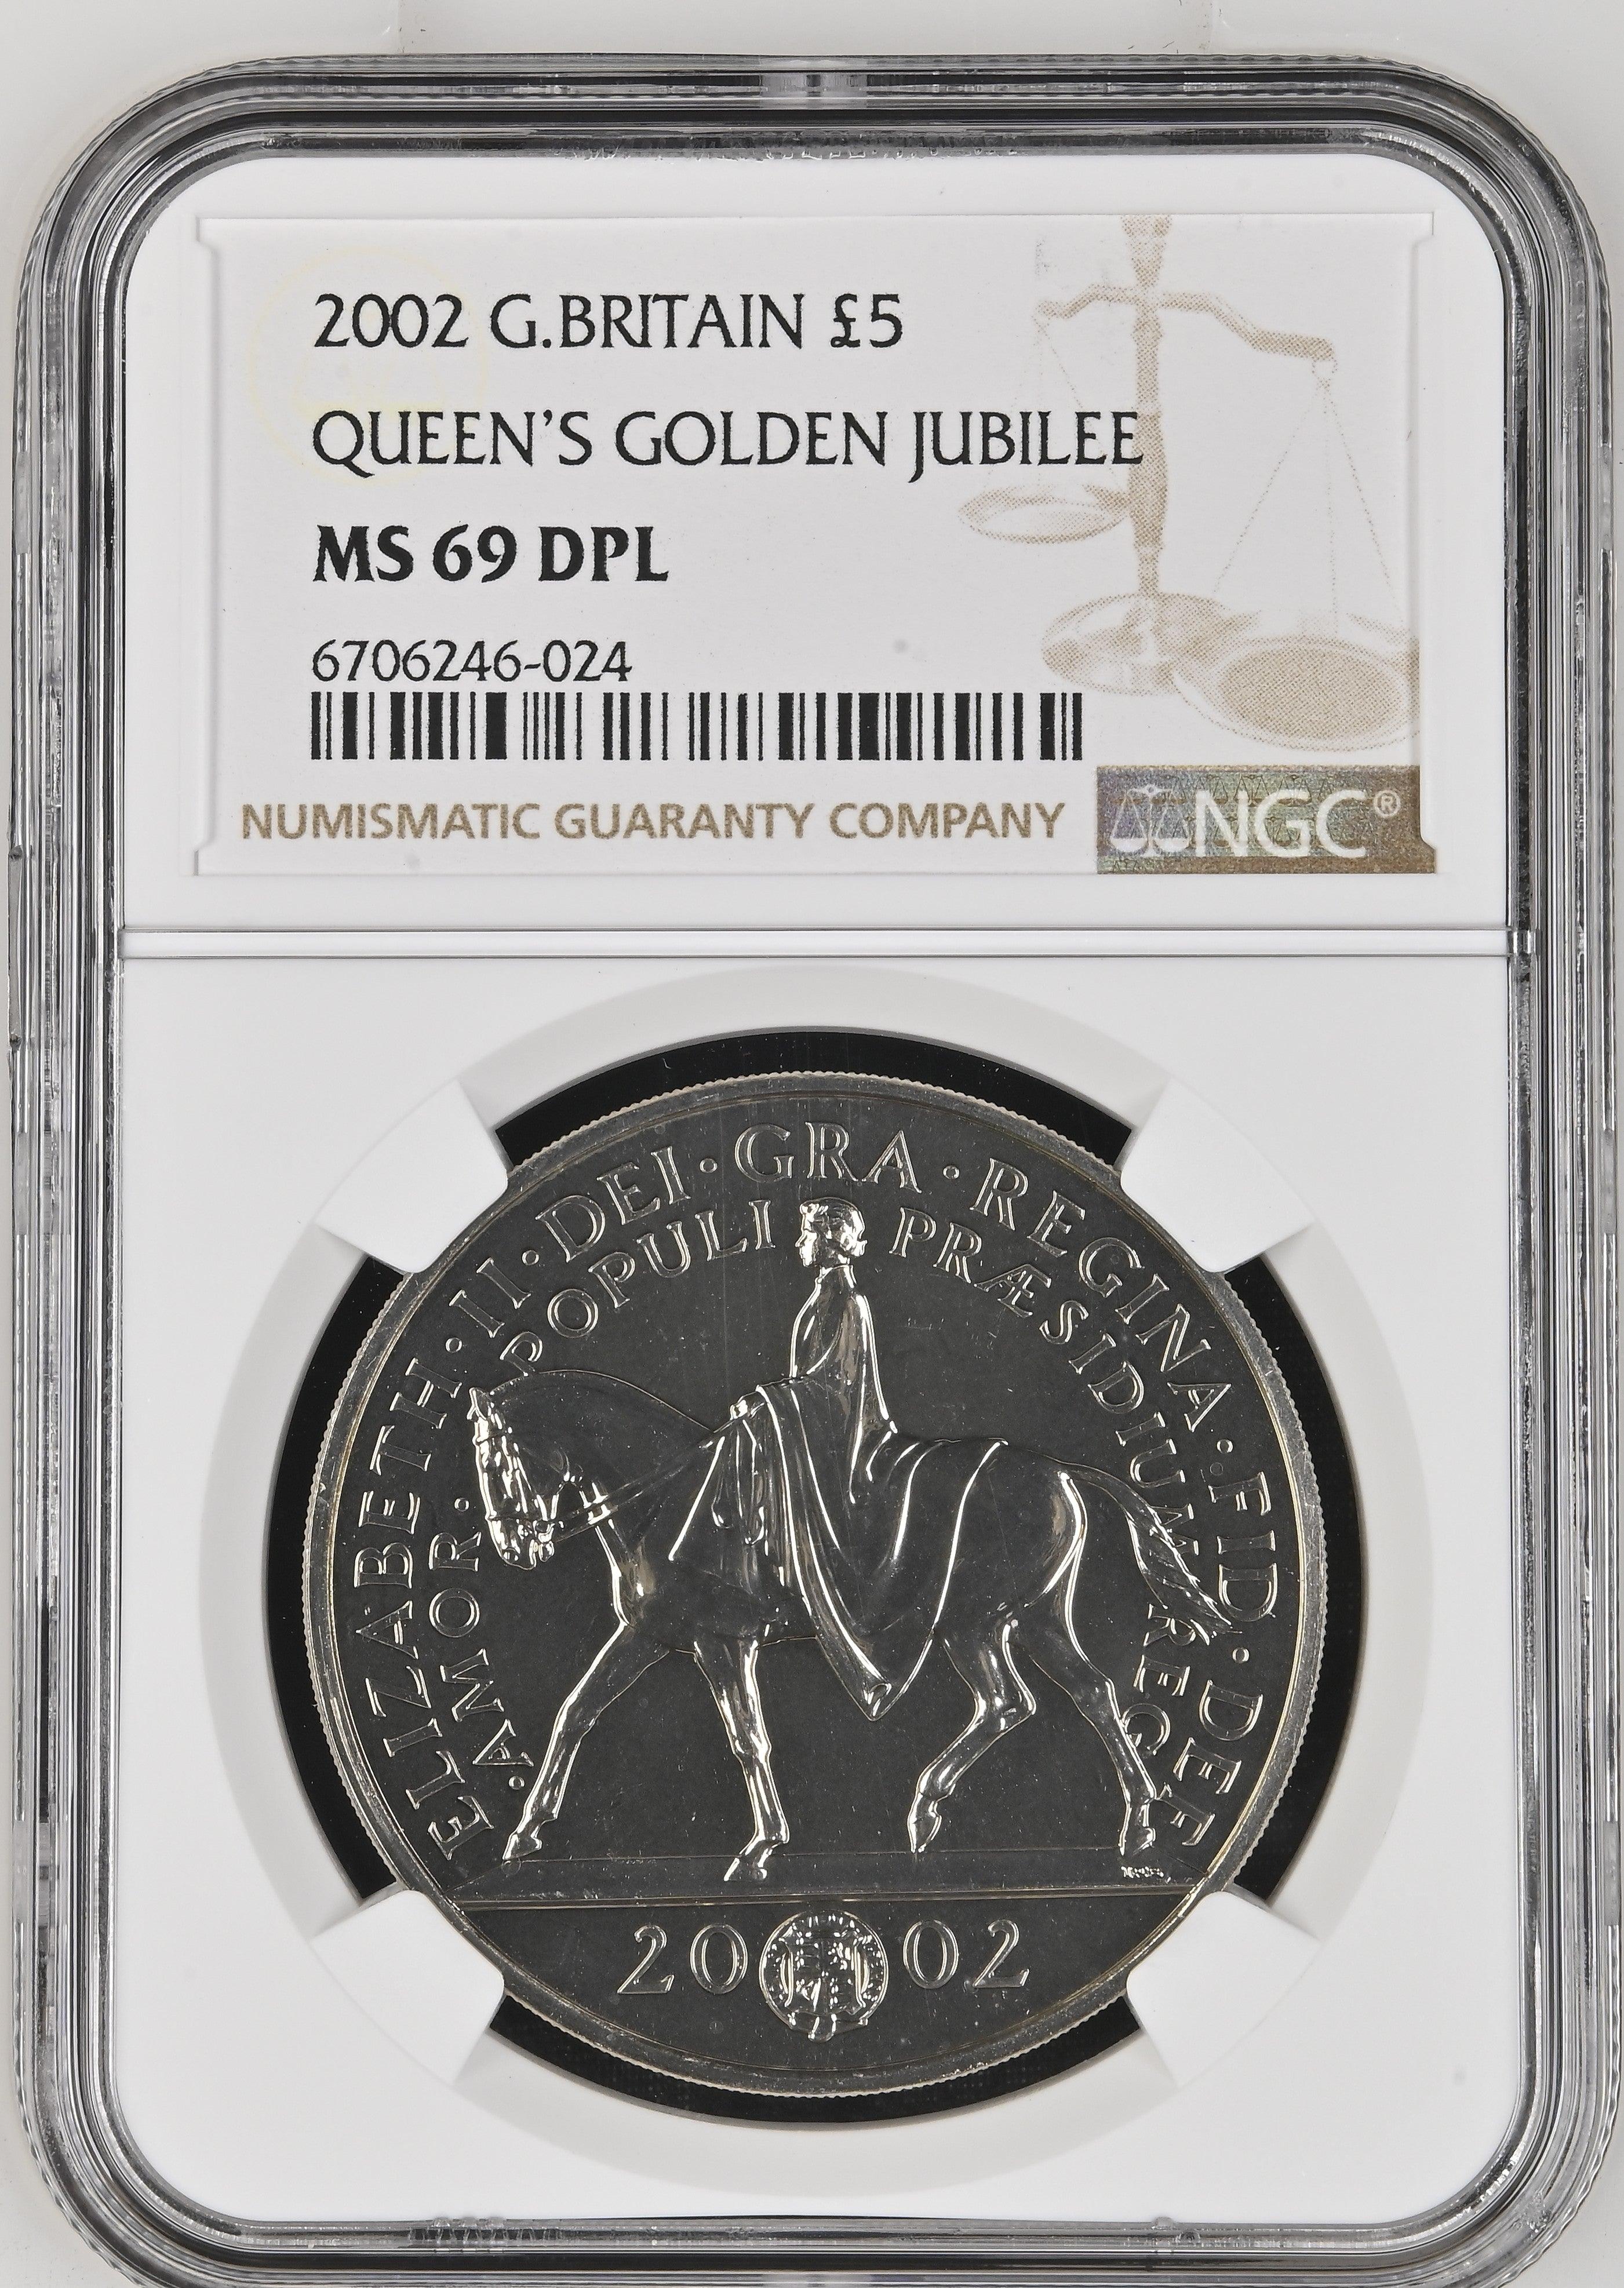 2002 Great Britain £5 Coin - The Queen's Golden Jubilee - Graded 